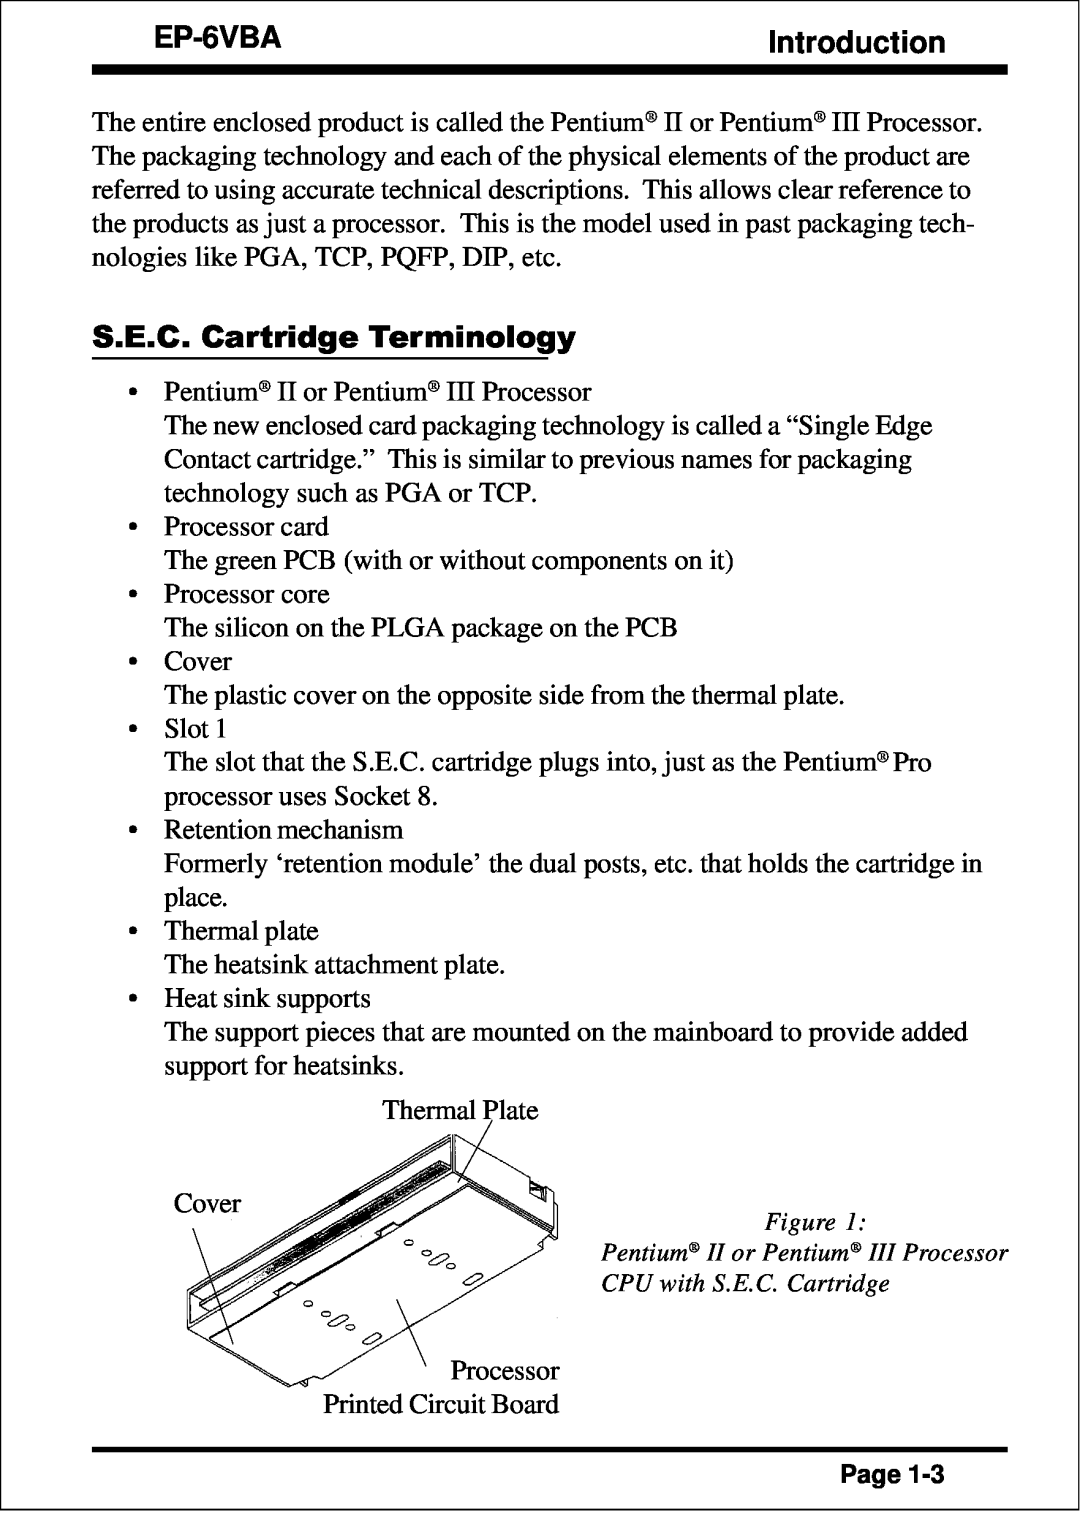 EPoX Computer EP-6VBA specifications Introduction, S.E.C. Cartridge Terminology 